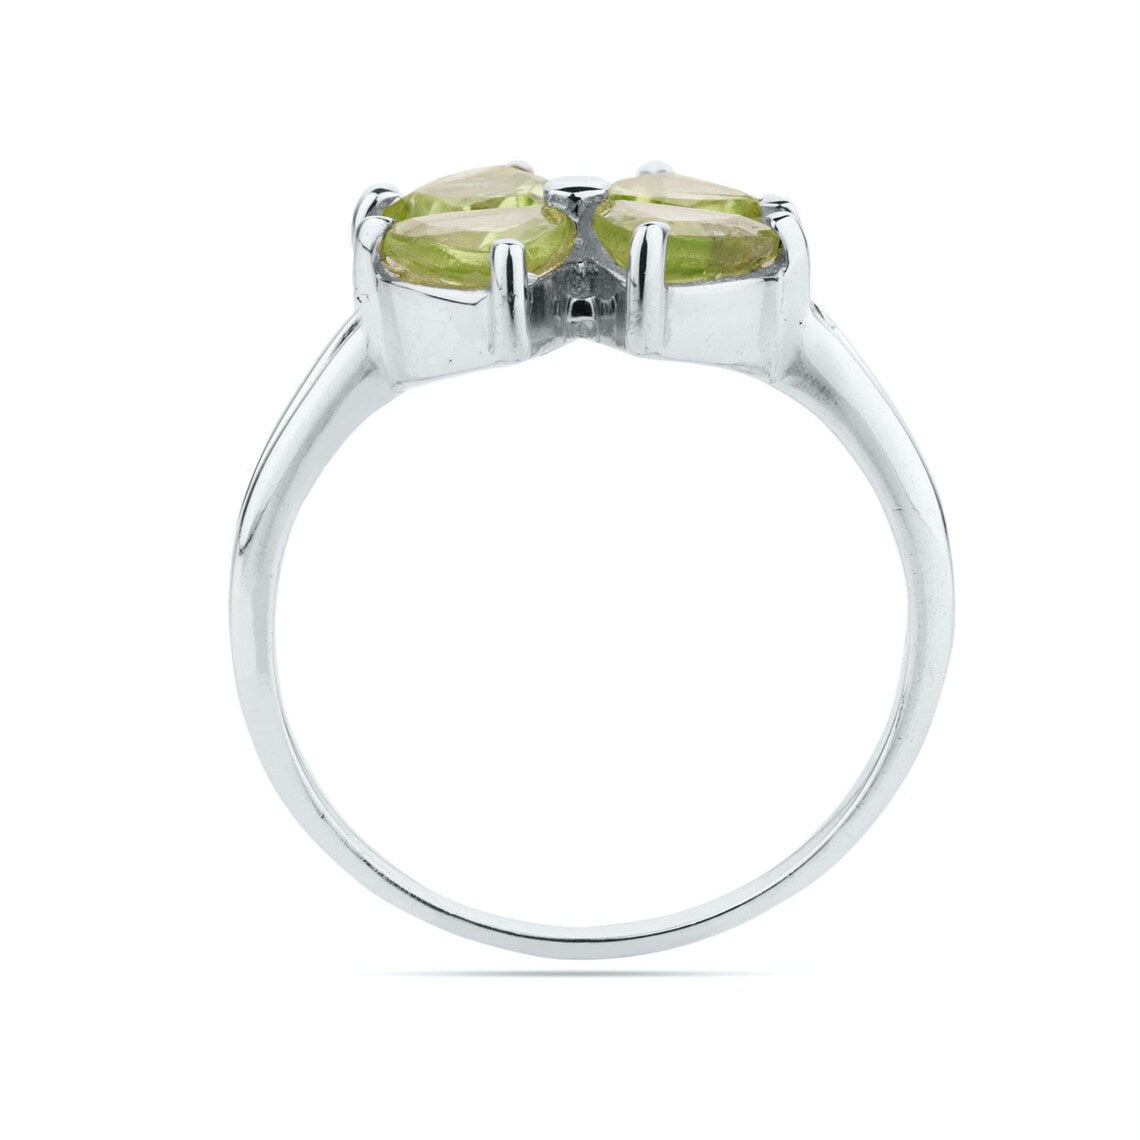 Peridot Ring Natural Green Peridot Flower Design Ring Peridot Gemstone Ring Sterling Solid Silver Peridot Ring Birthstone Ring Handmade